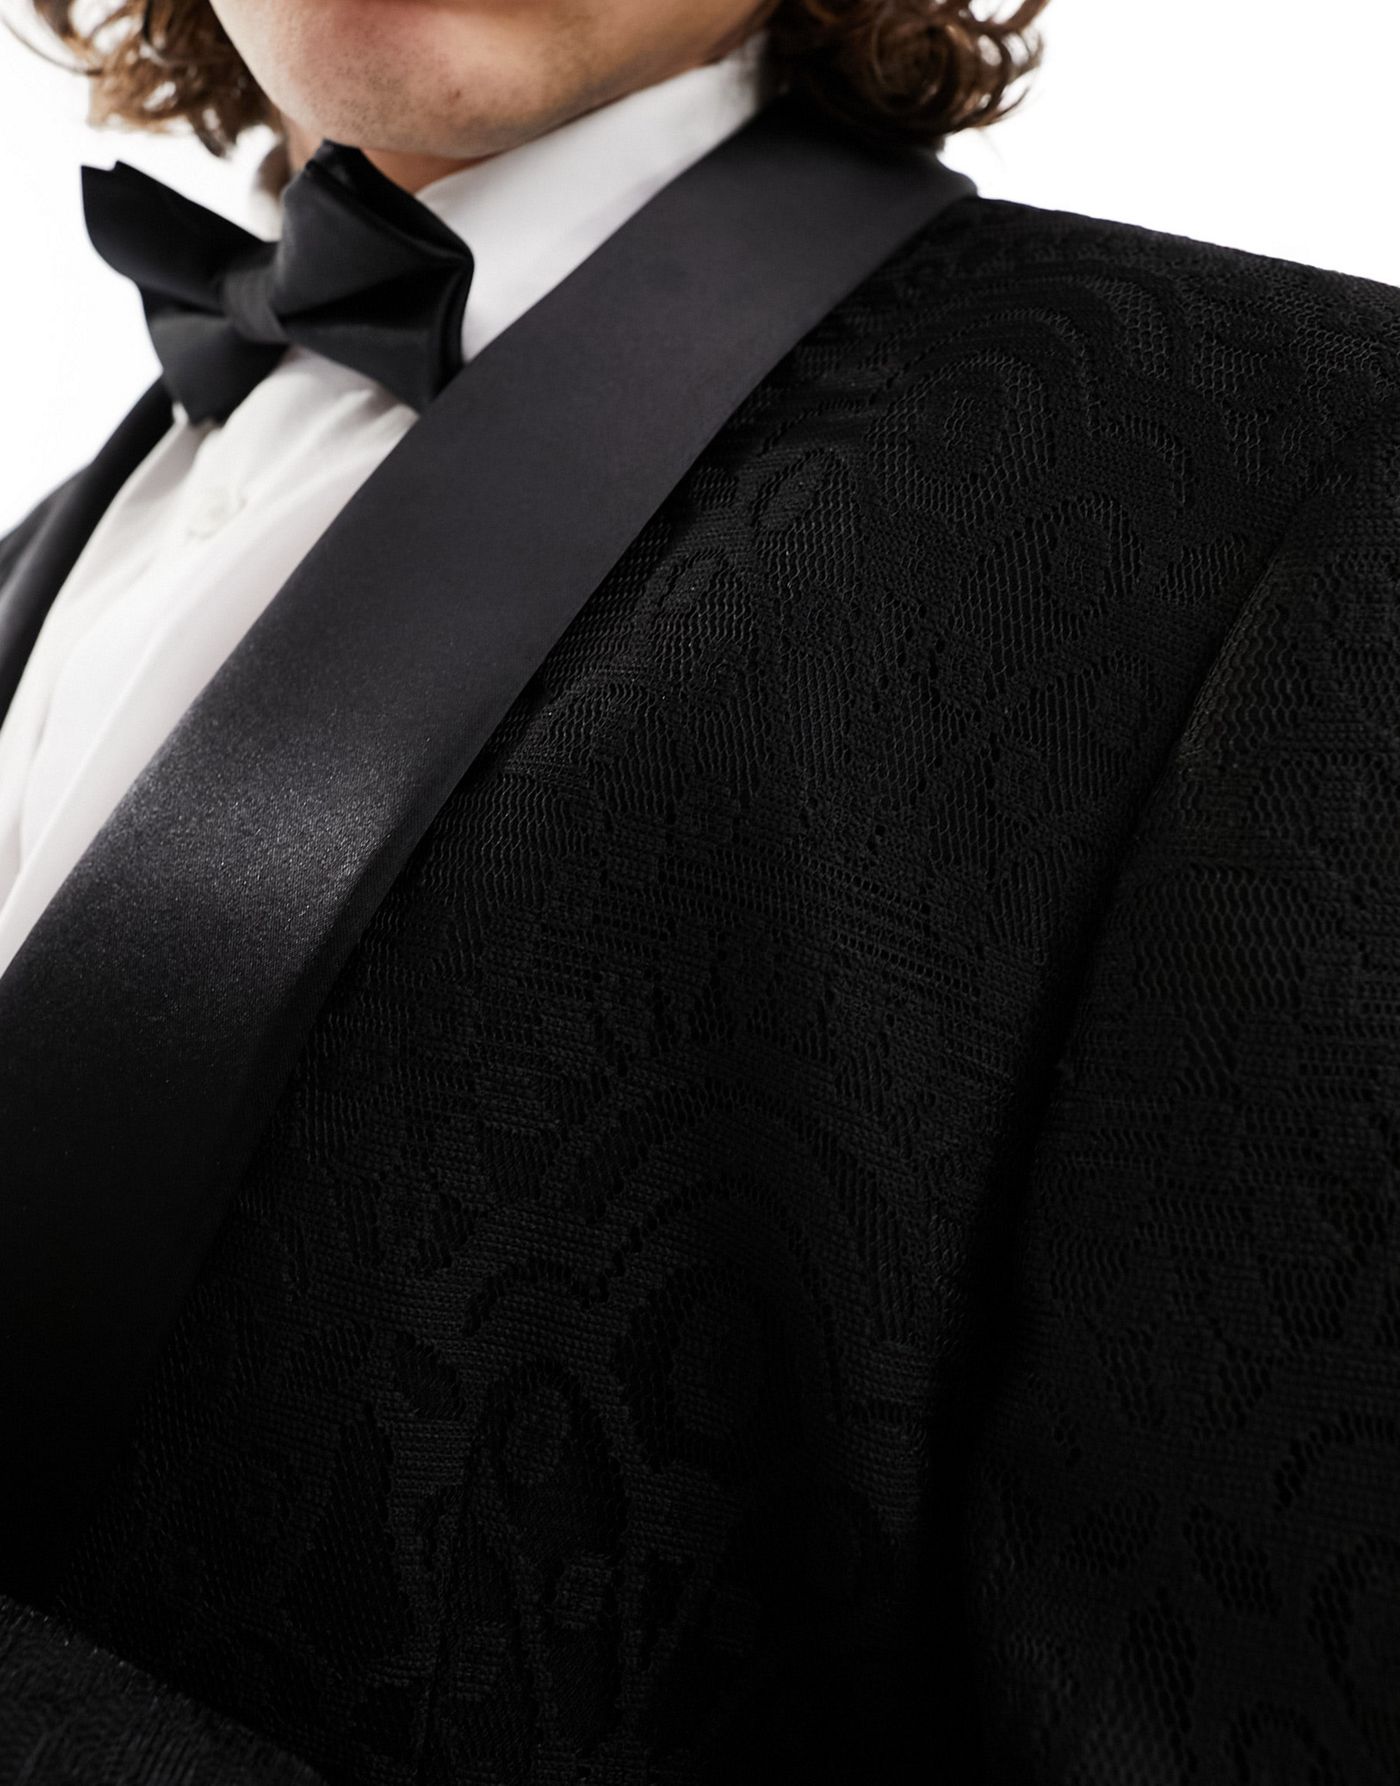 ASOS DESIGN skinny suit tuxedo jacket in black lace